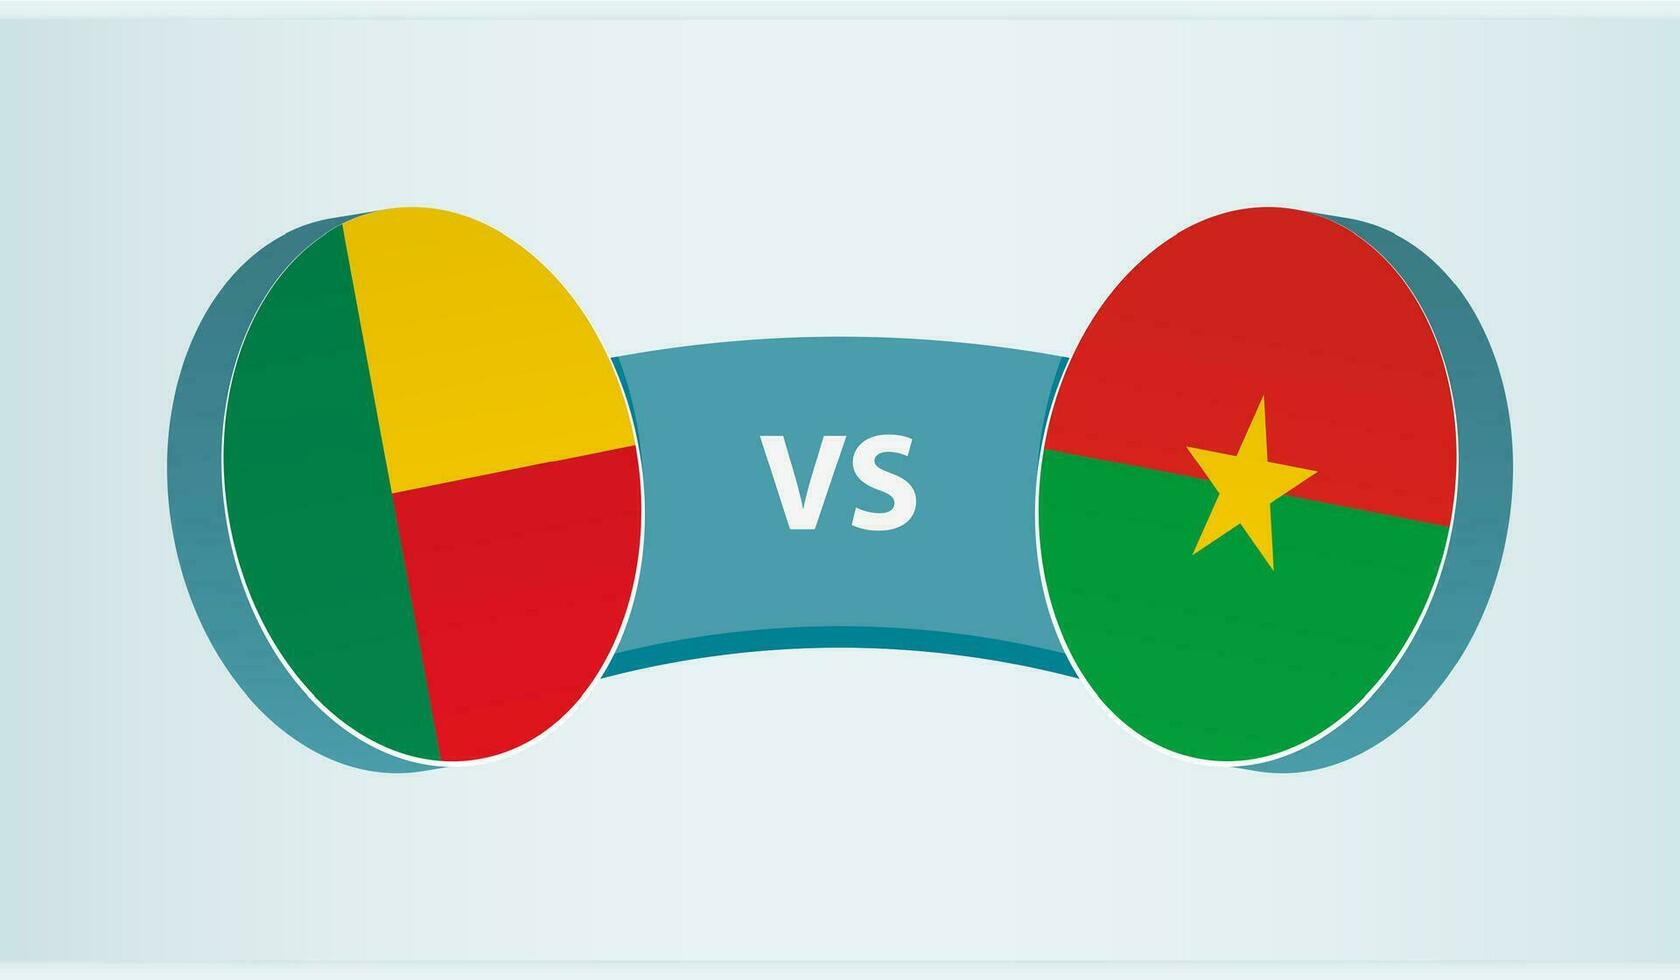 Benin versus Burkina Faso, team sports competition concept. vector